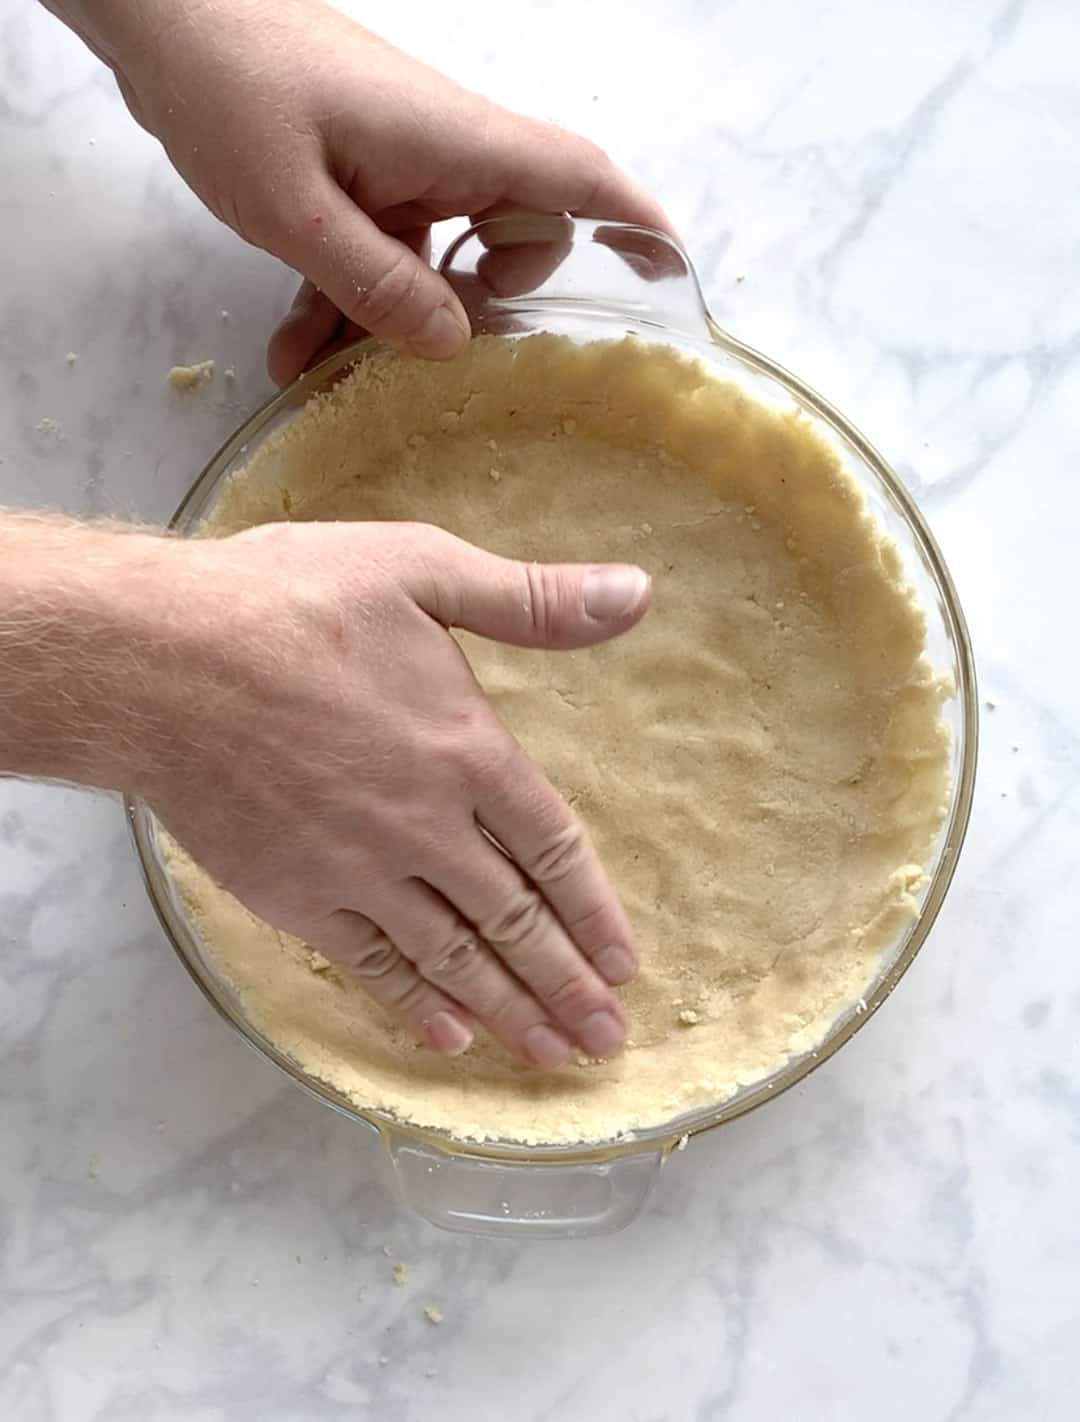 Process shot of pressing almond flour dough into a pie pan